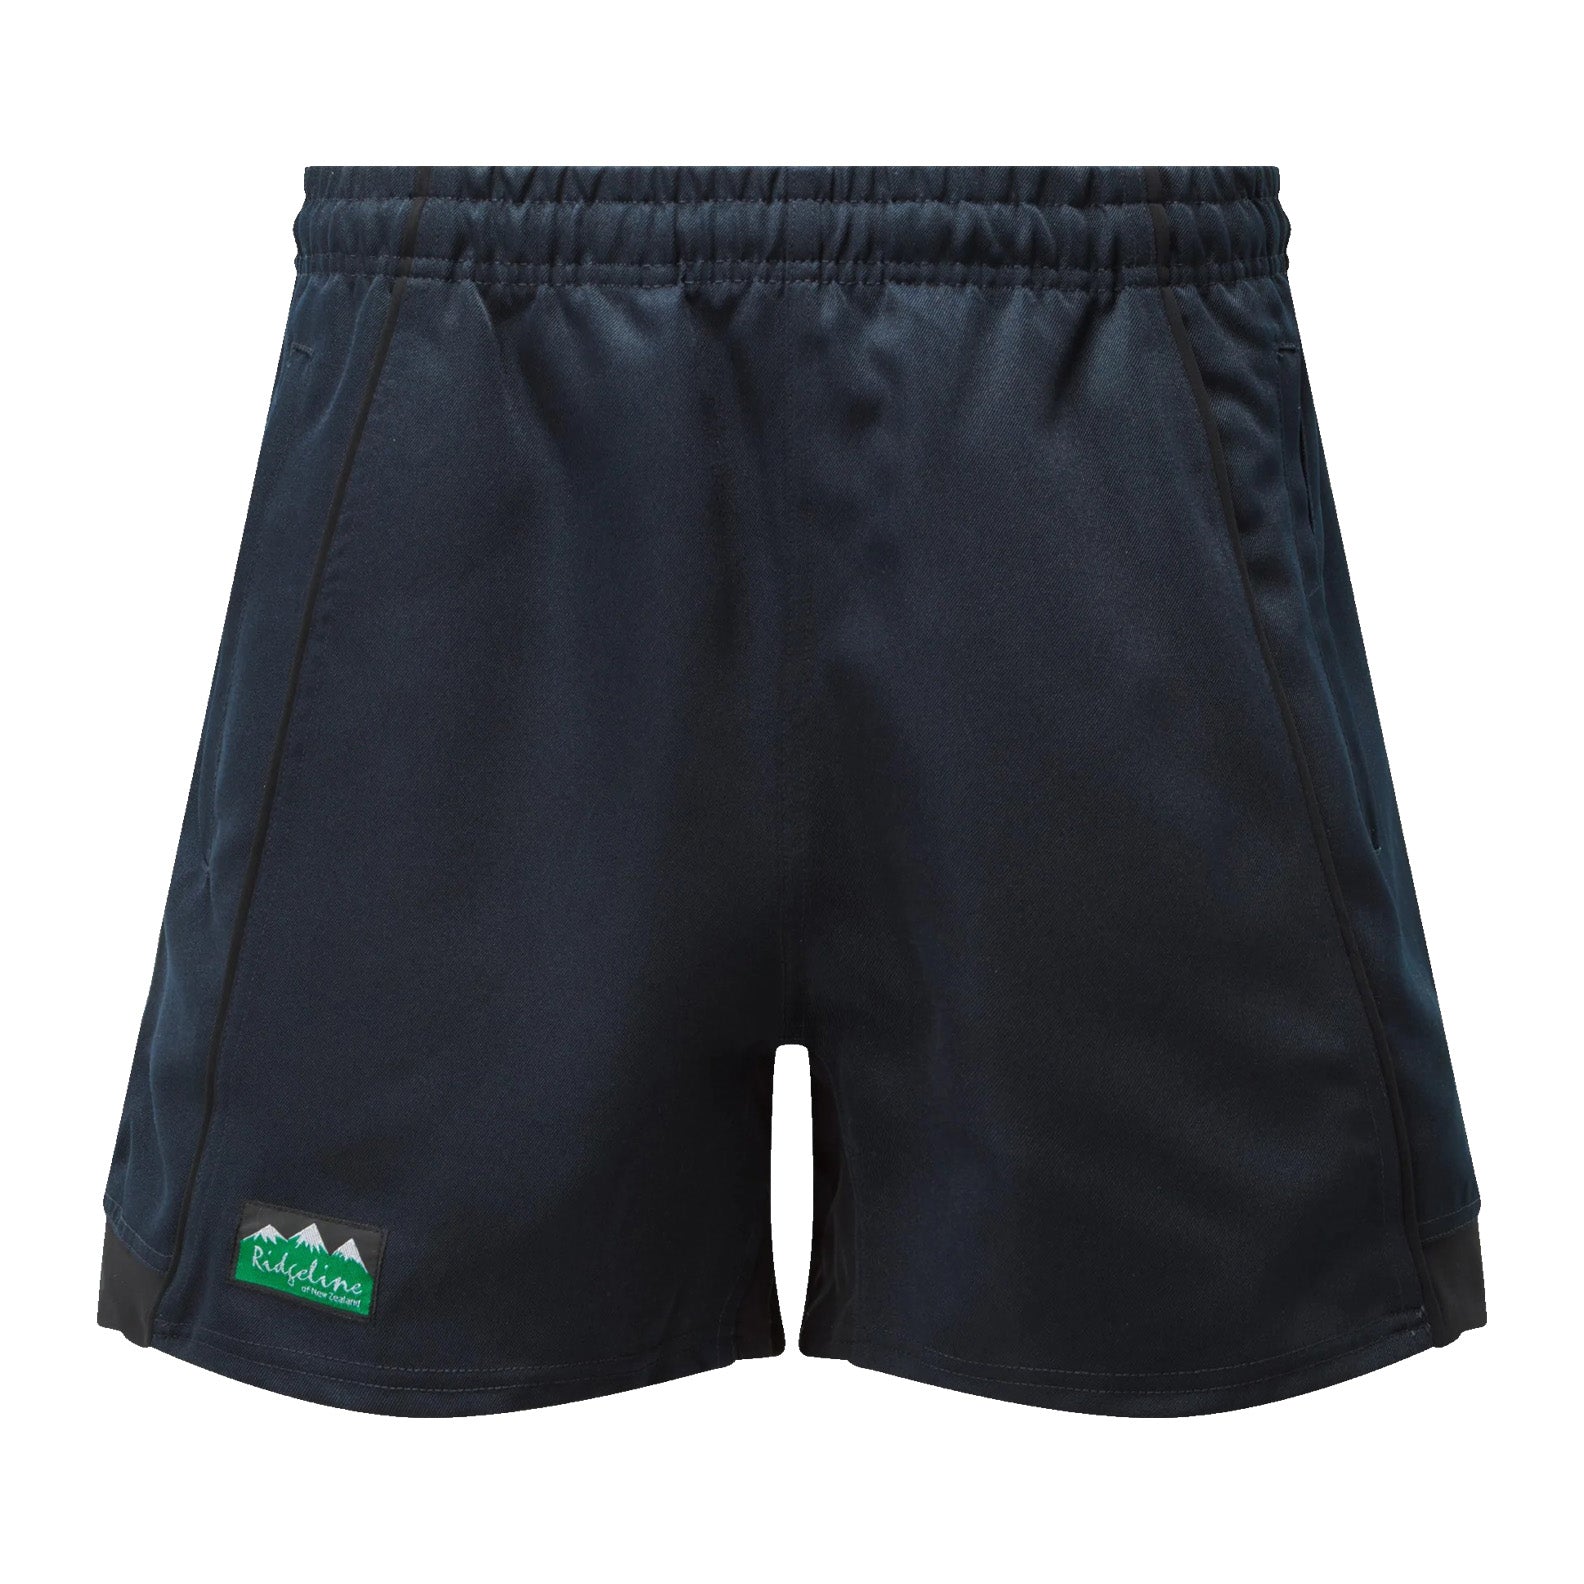 Ridgeline-Classic-Lineout-Shorts